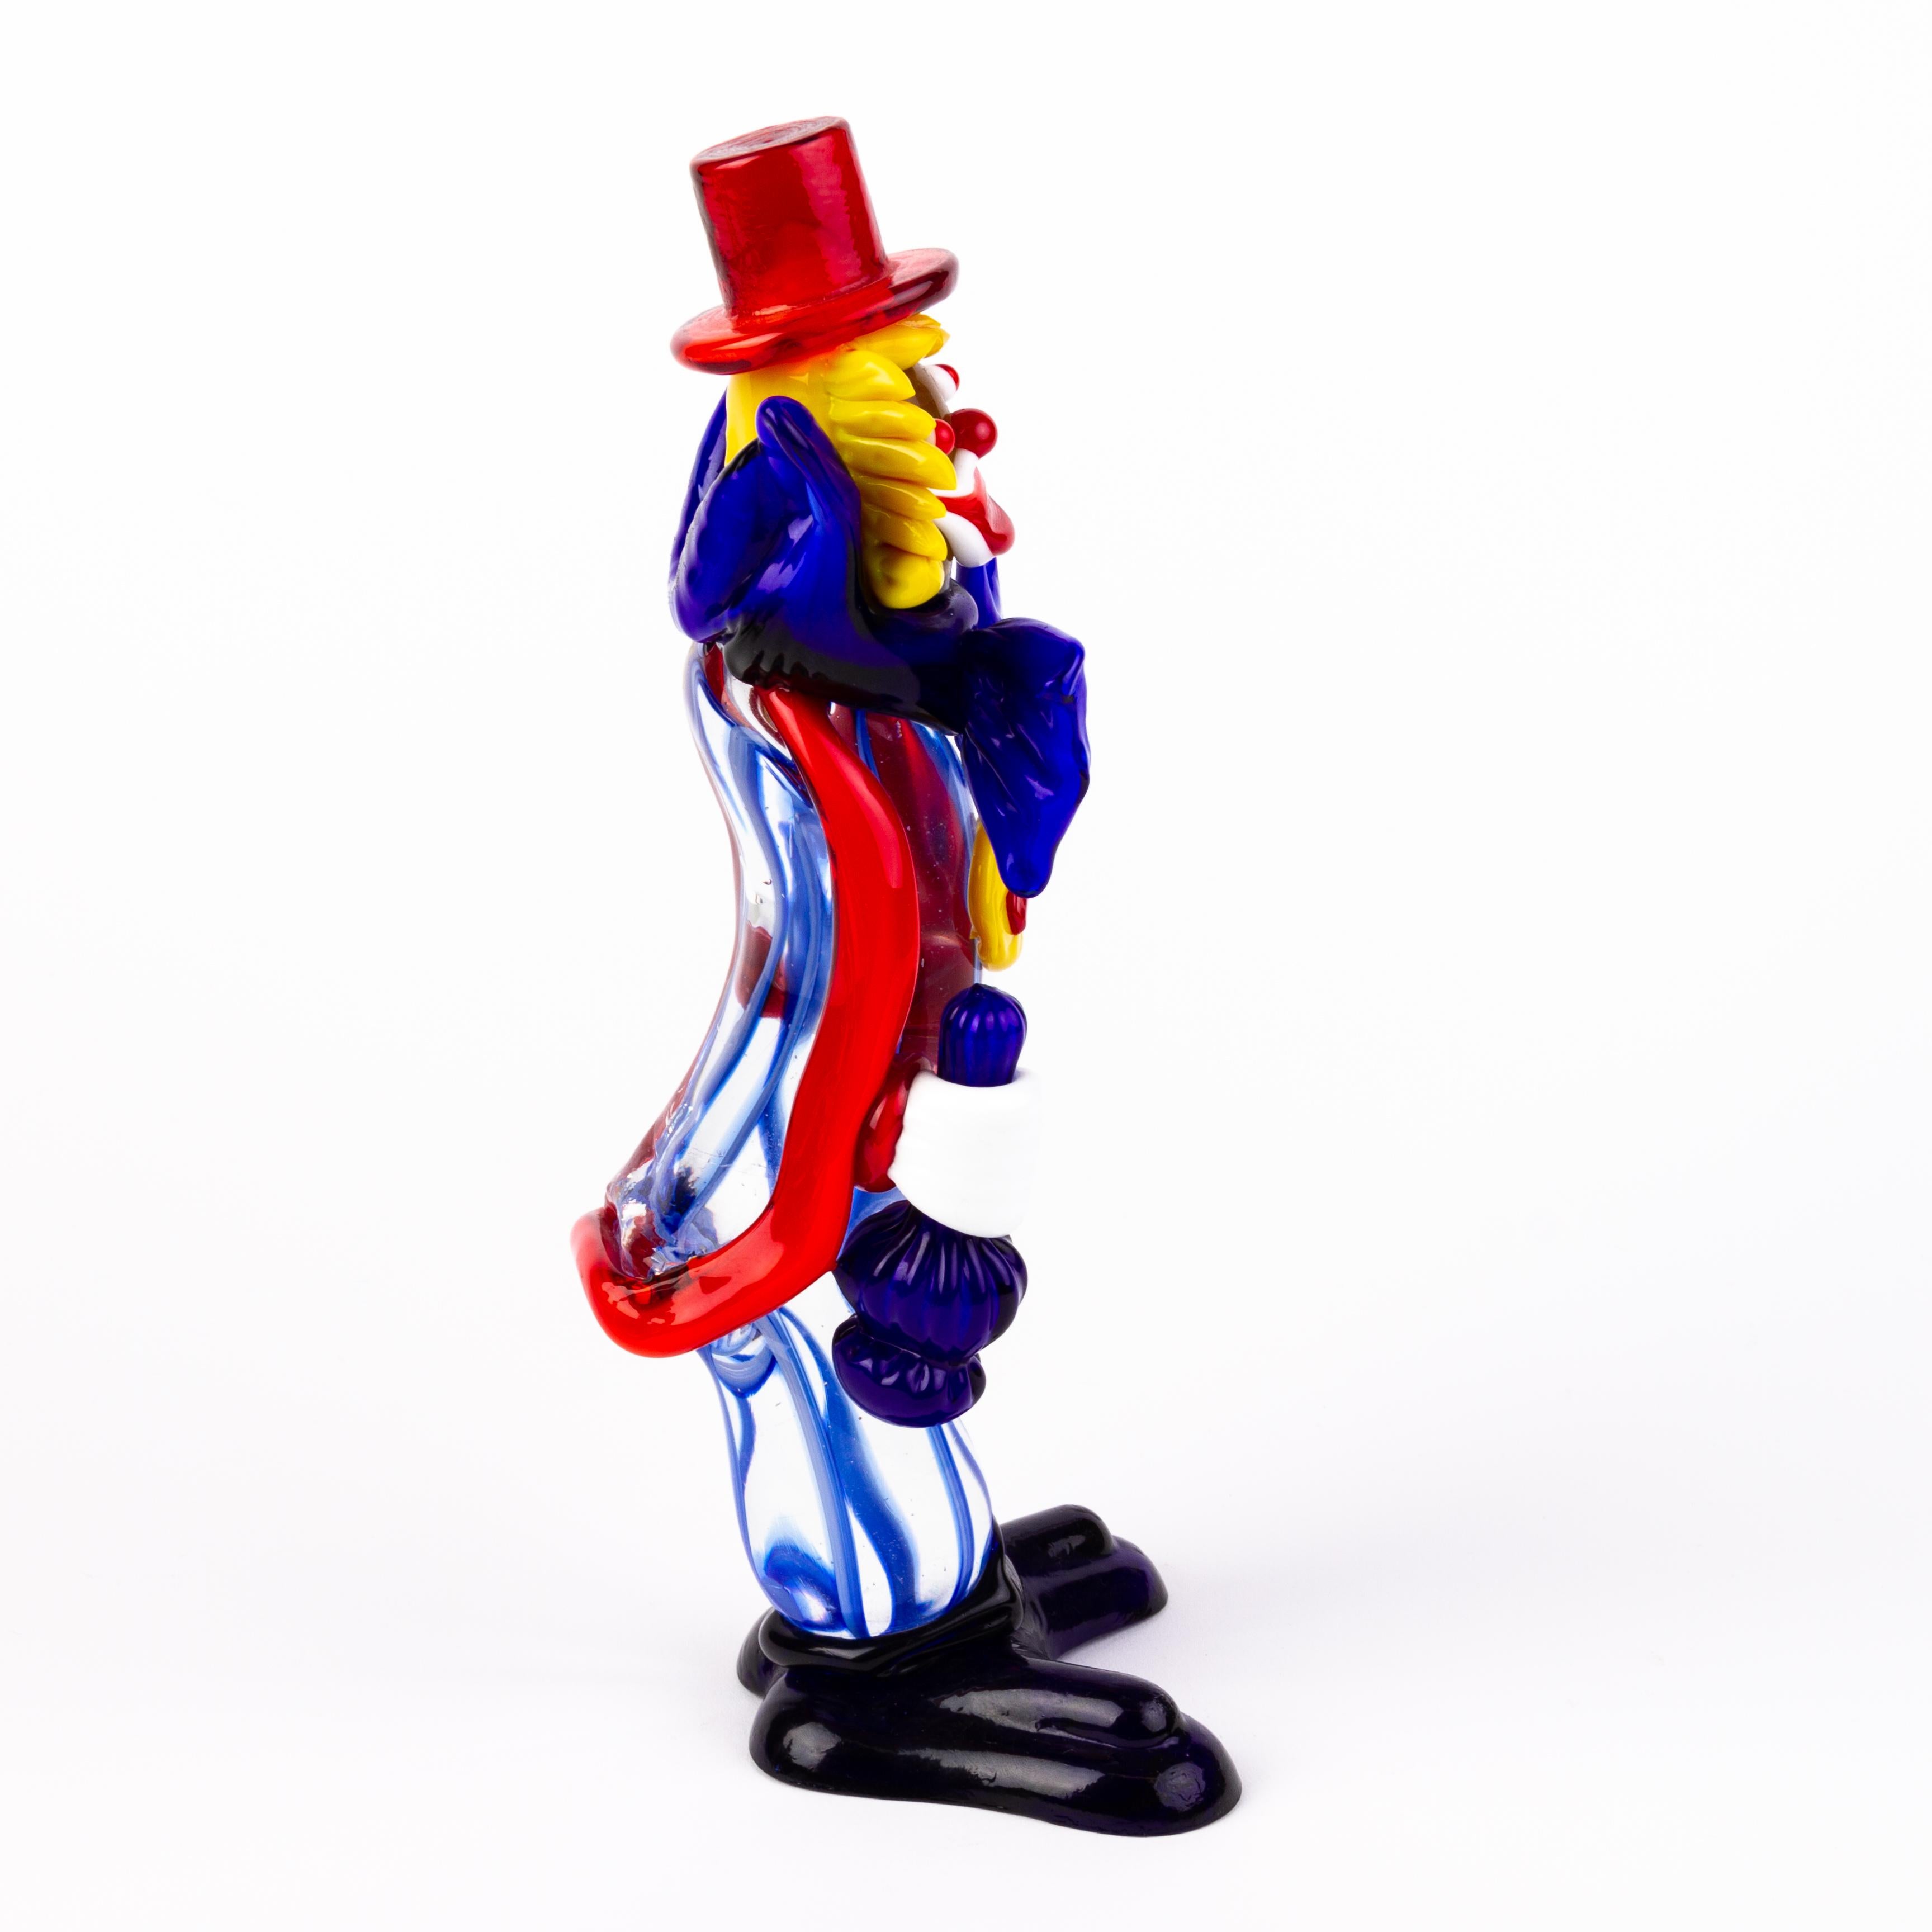 Murano Venetian Glass Sculpture Designer Clown
Good condition
Free international shipping.